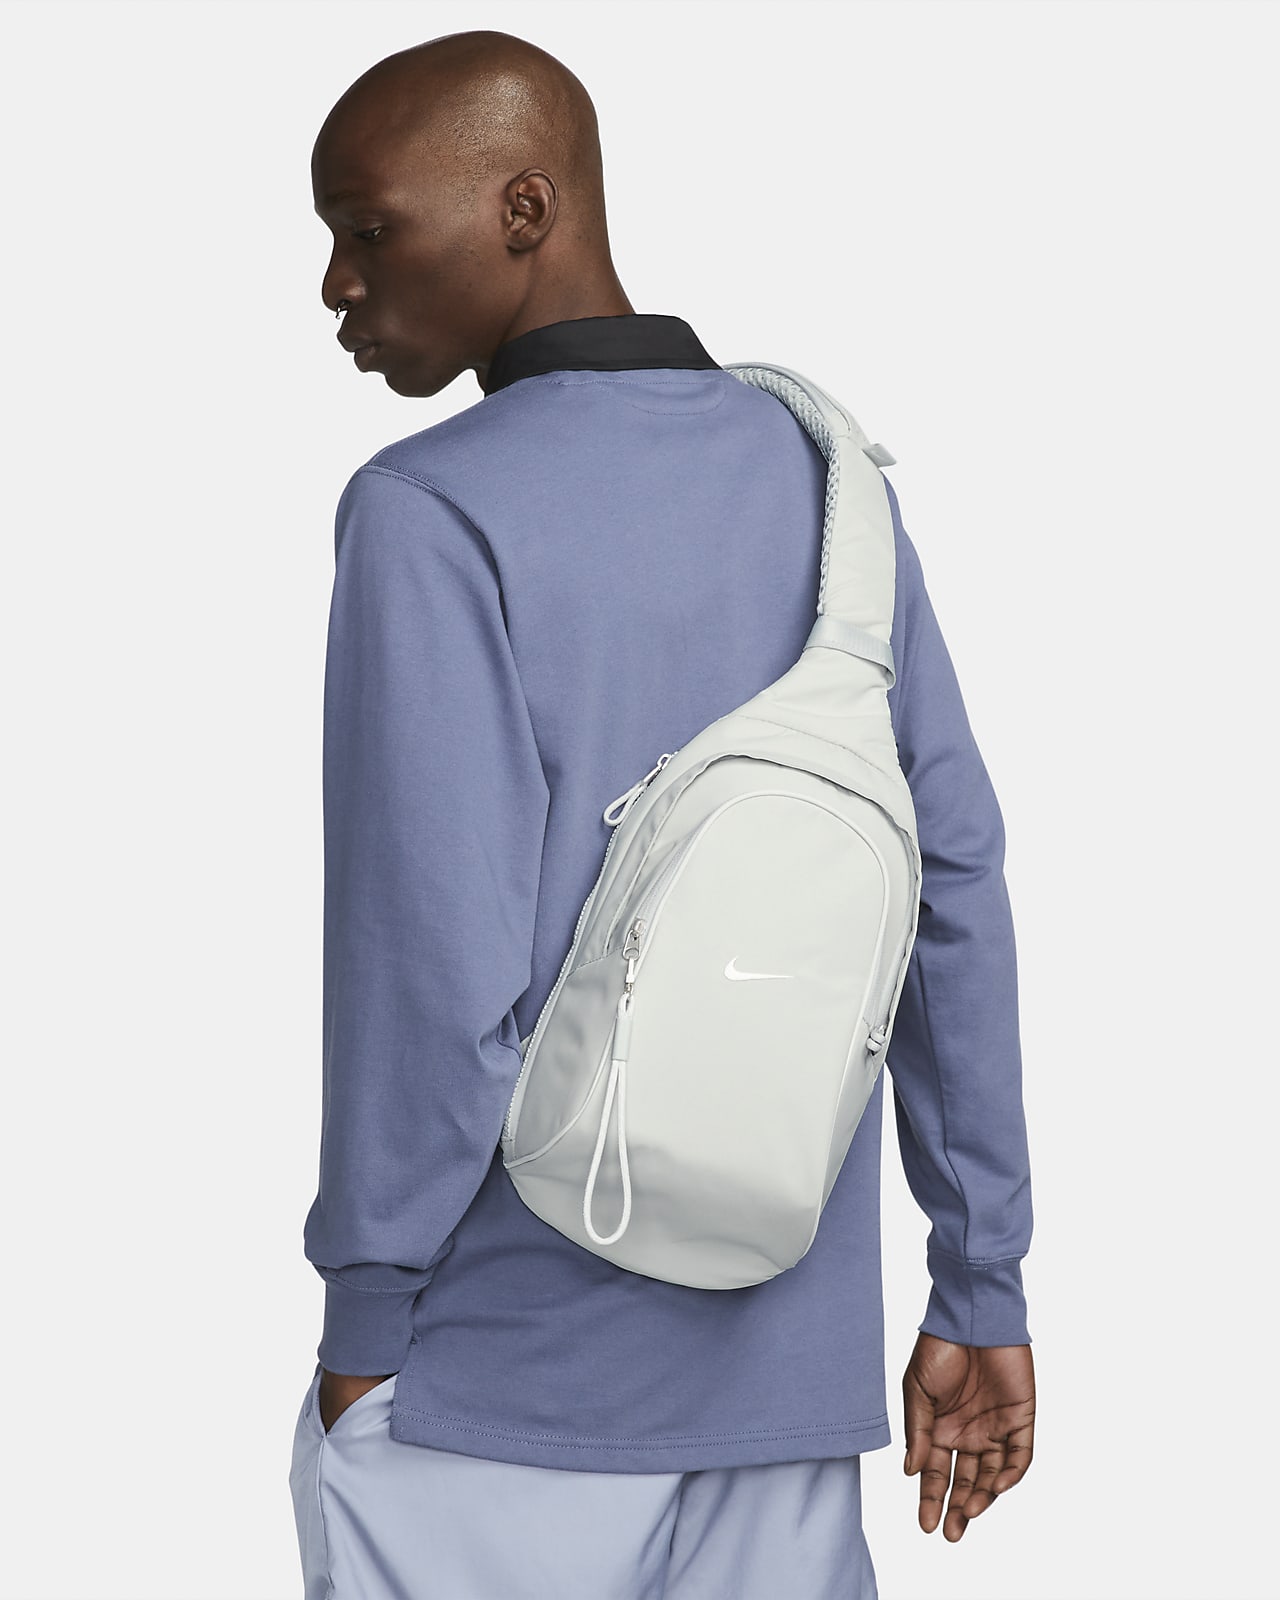 Share 150+ new sling bag latest